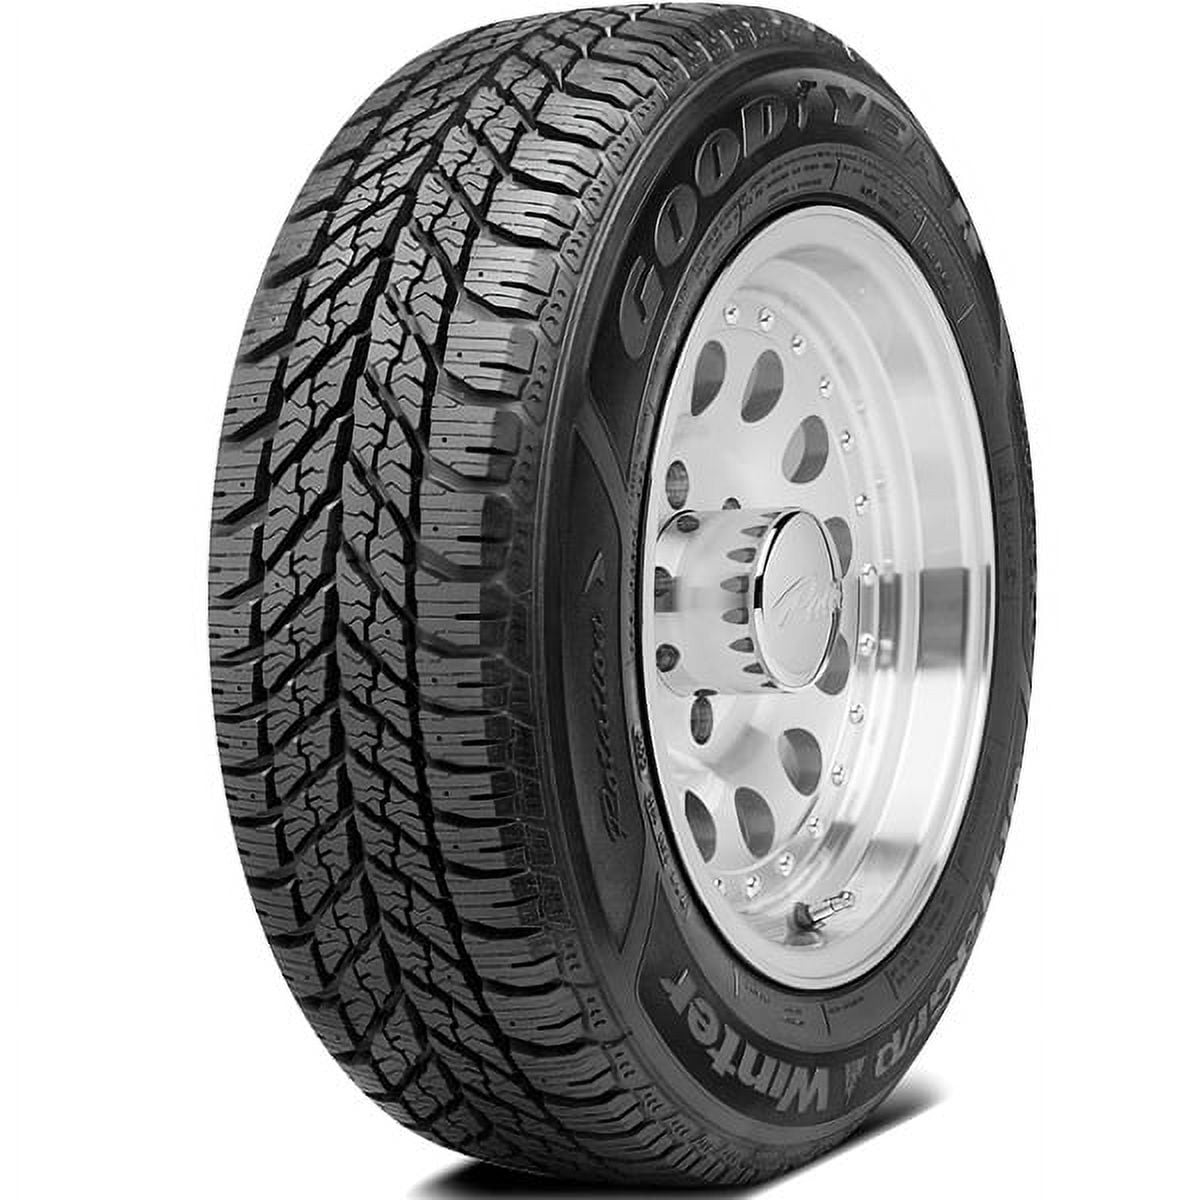 Ultra Goodyear T 225/60R17 99 Winter Grip Tire